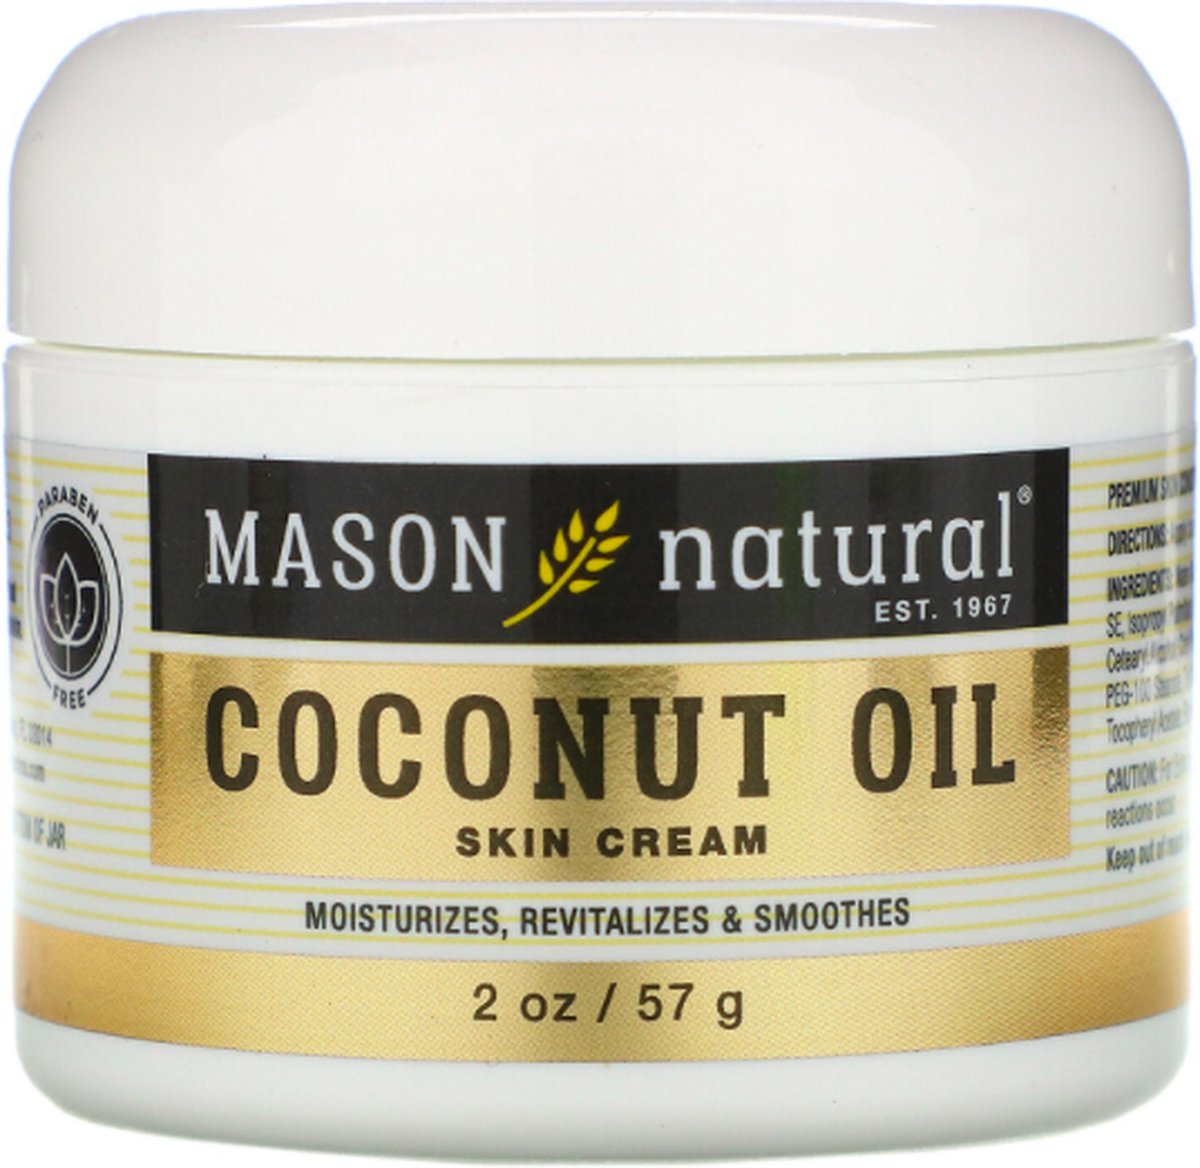 Coconut Oil Skin Cream - 57g